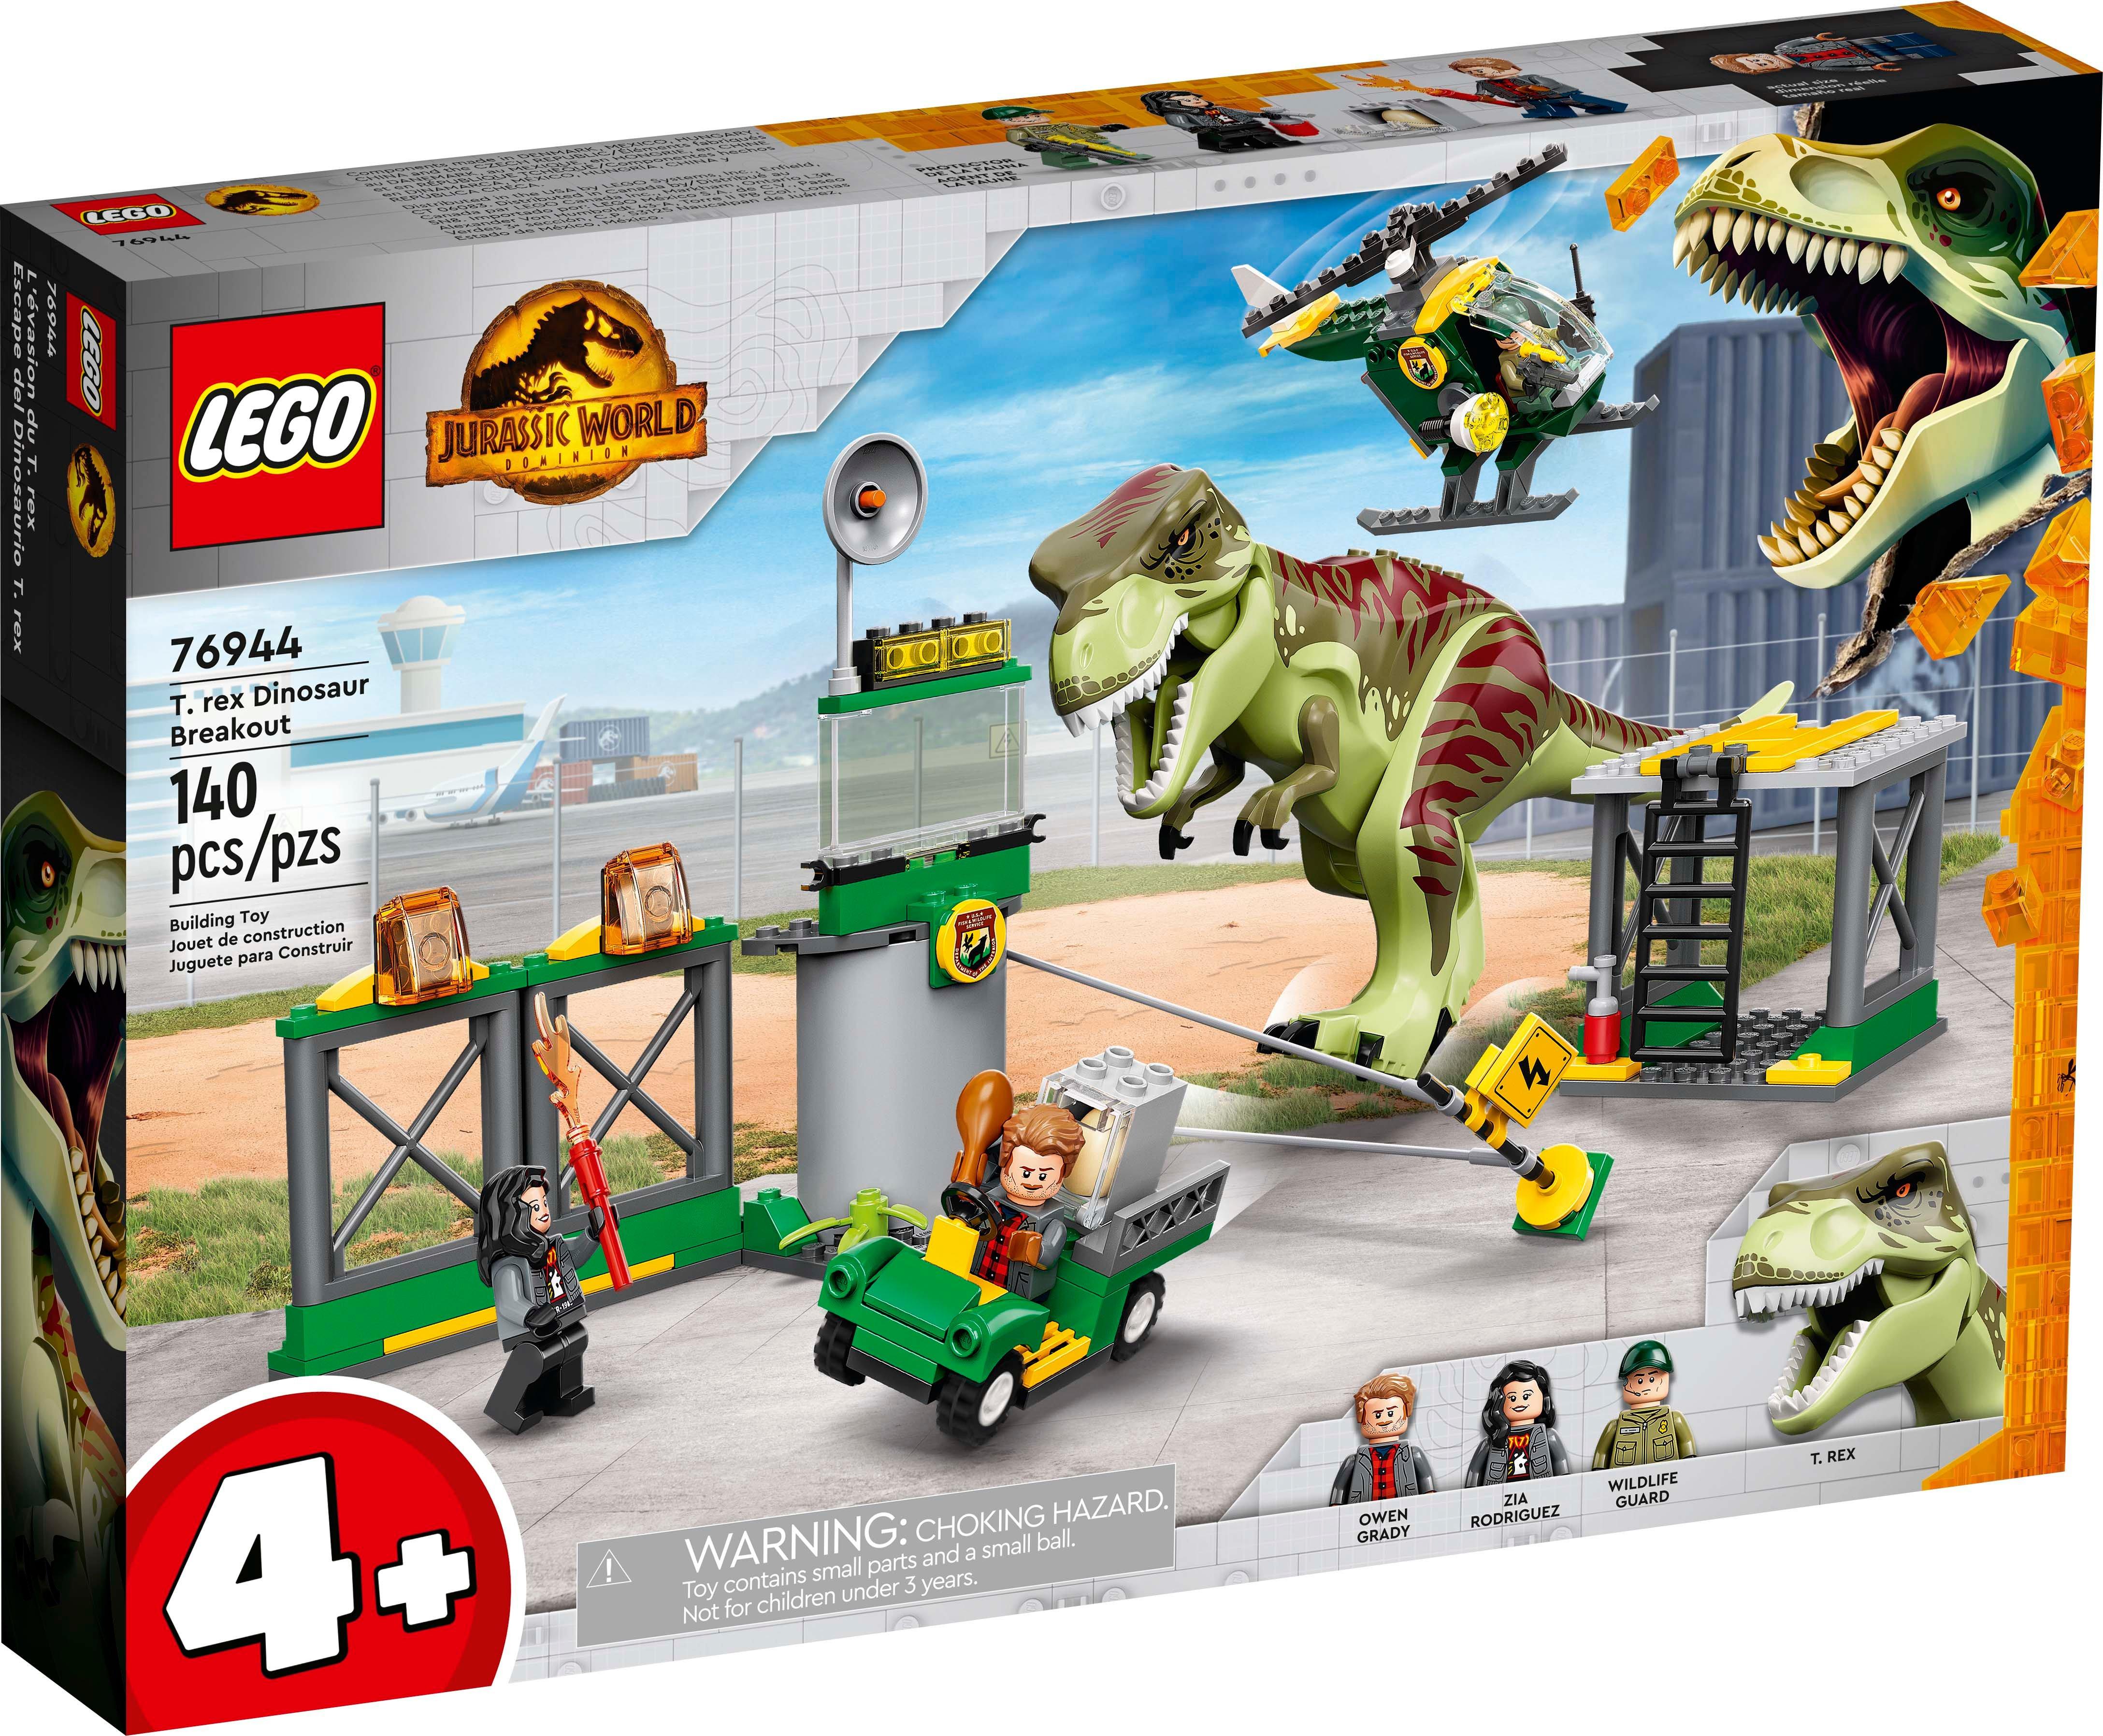 list item 1 of 14 LEGO Jurassic World T. rex Dinosaur Breakout 76944